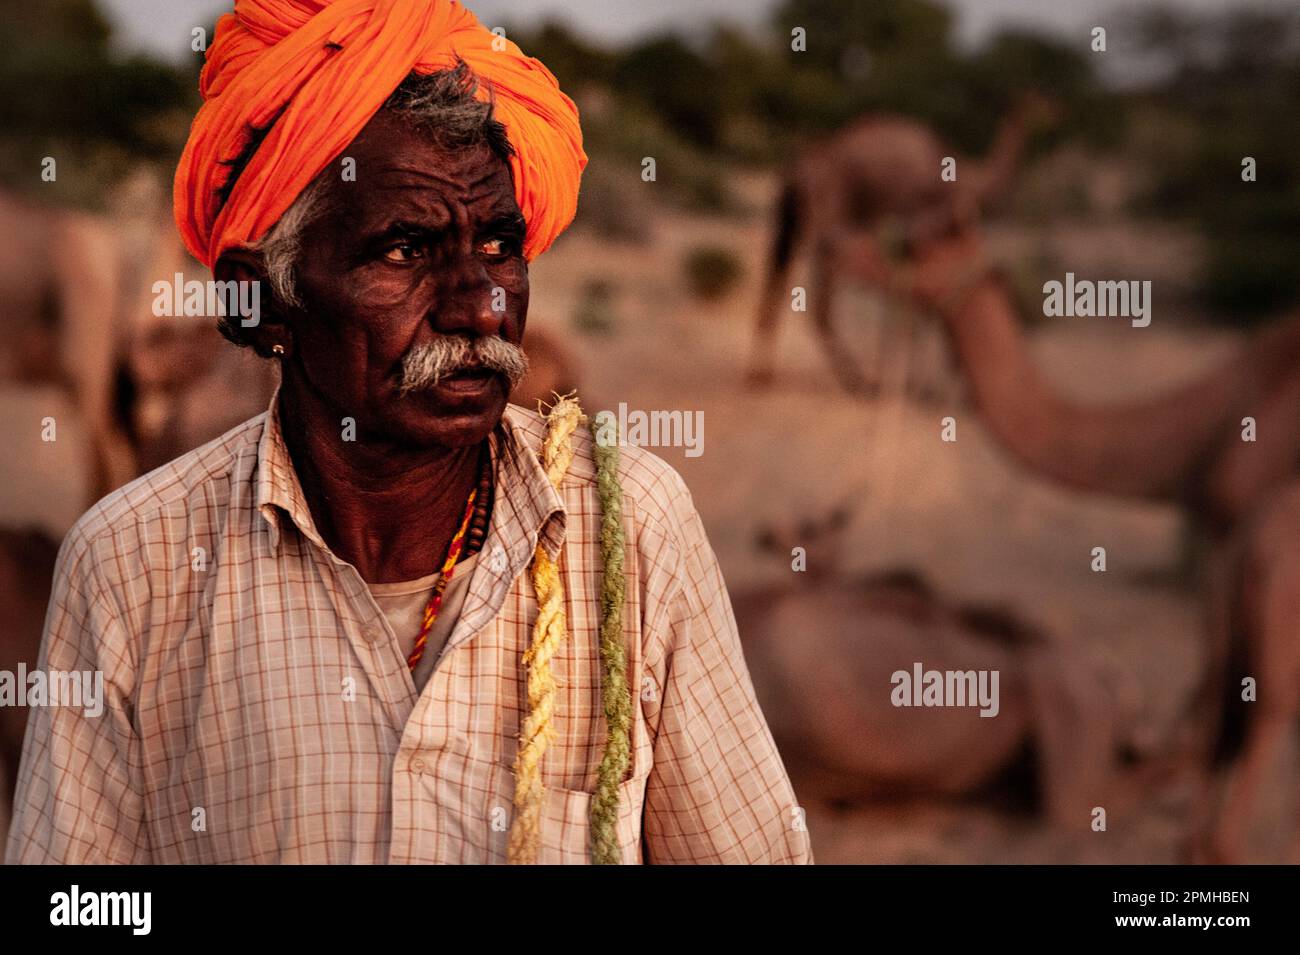 Jaisalmer desert town life, India Stock Photo